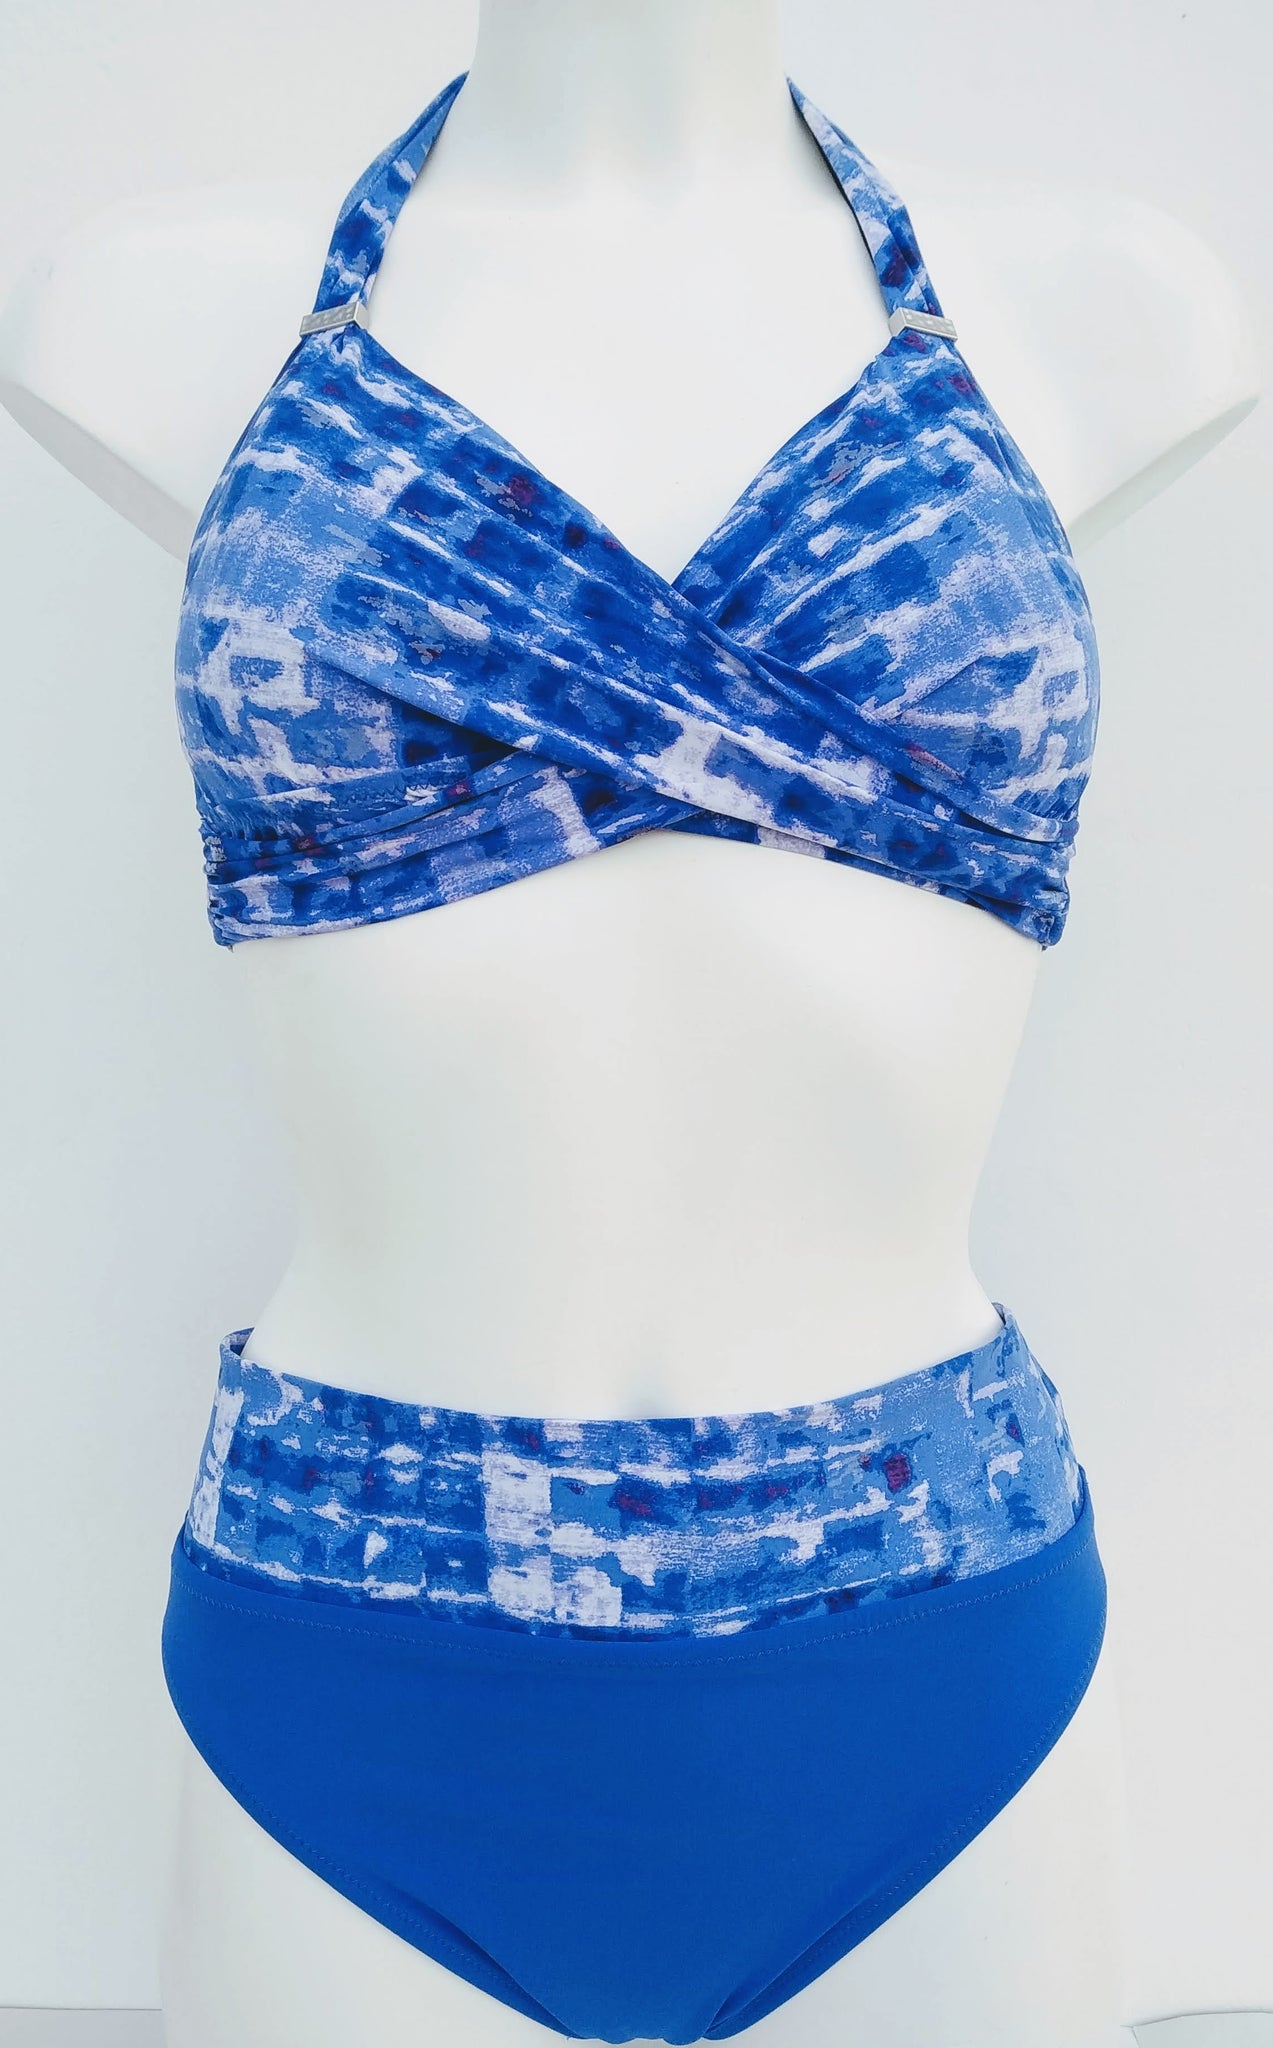 Blue Bikini Two-pieces halter bra fully lined padded bra, and high waist bottom,  Bañador azul con sujetador sin aros, muy envolvente y sujetando el pecho. Bikinn.com